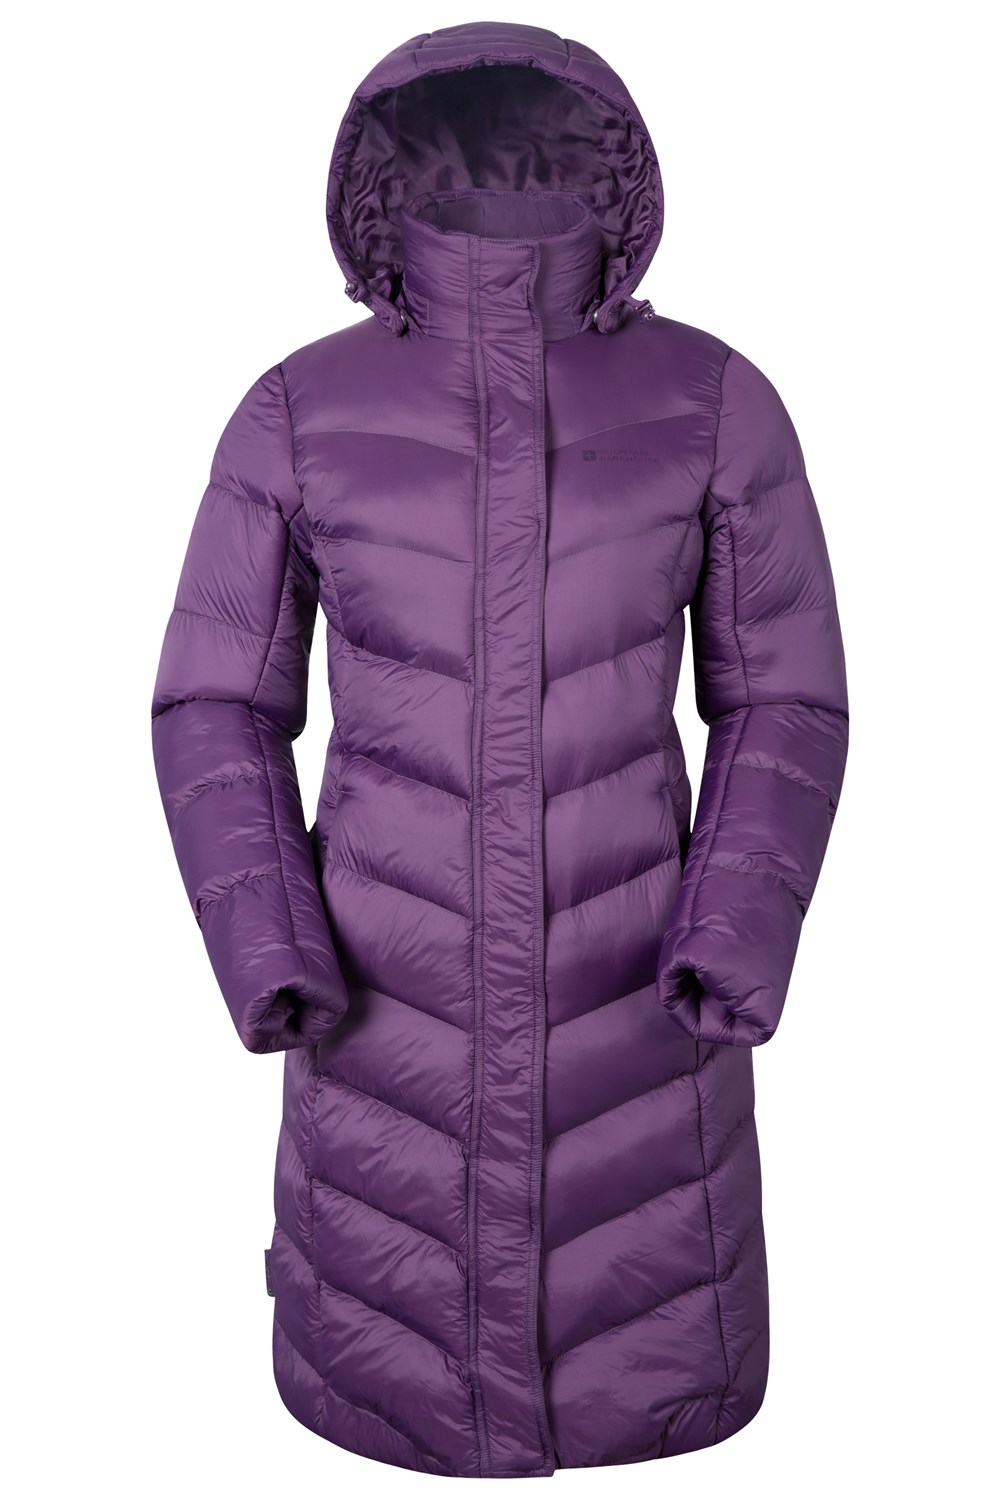 Mountain Warehouse Ladies Long Padded Jacket Water Resistant Winter ...